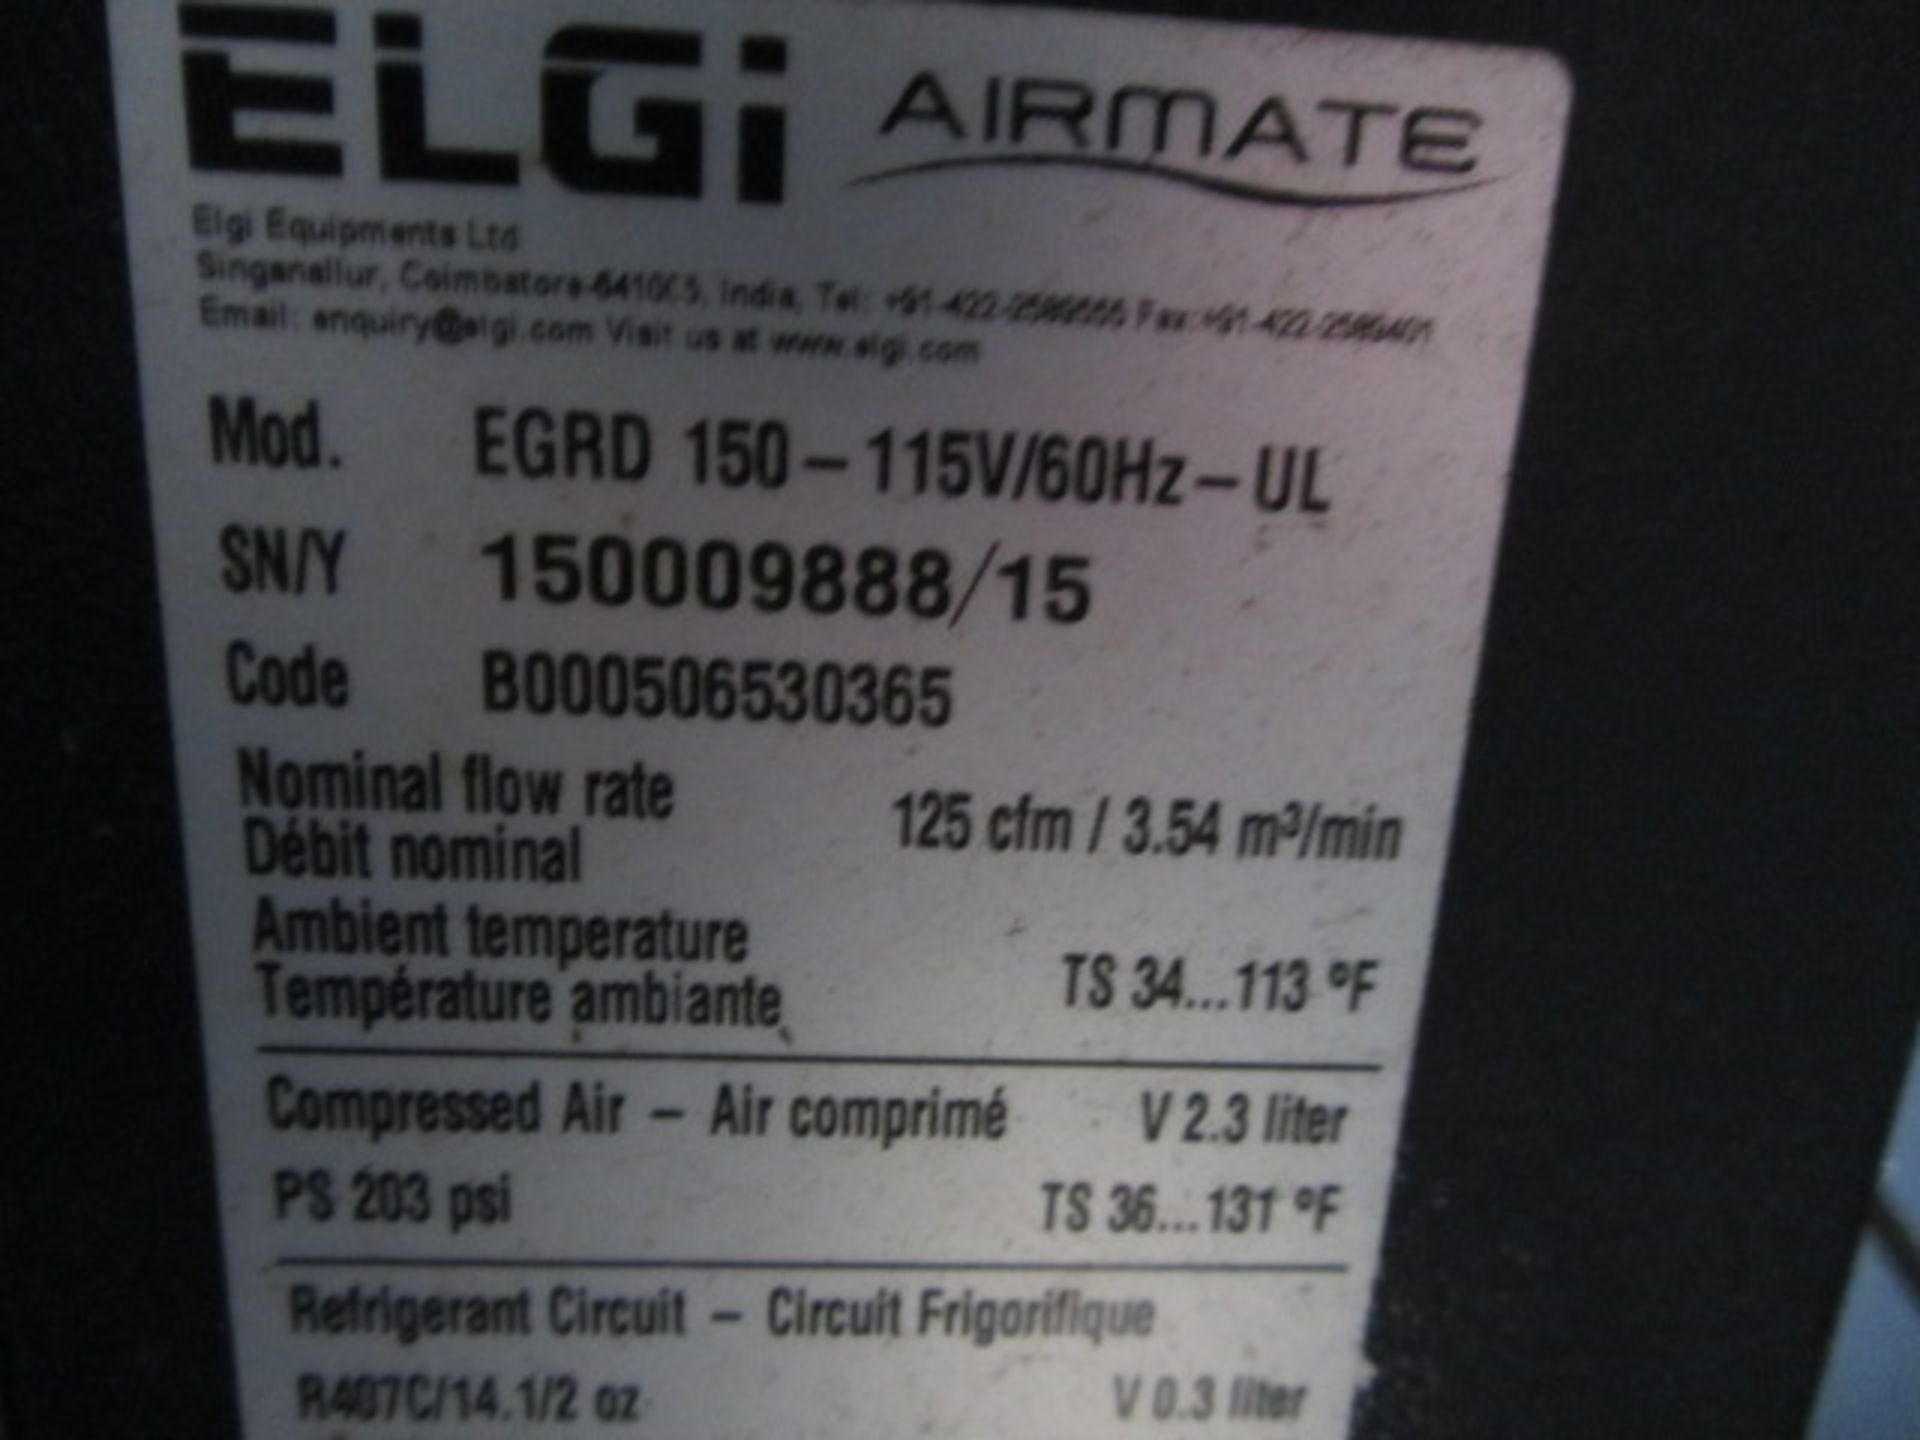 Elgi Model EGRD150 Air Dryer, sn:150009888/15 - Bild 5 aus 5